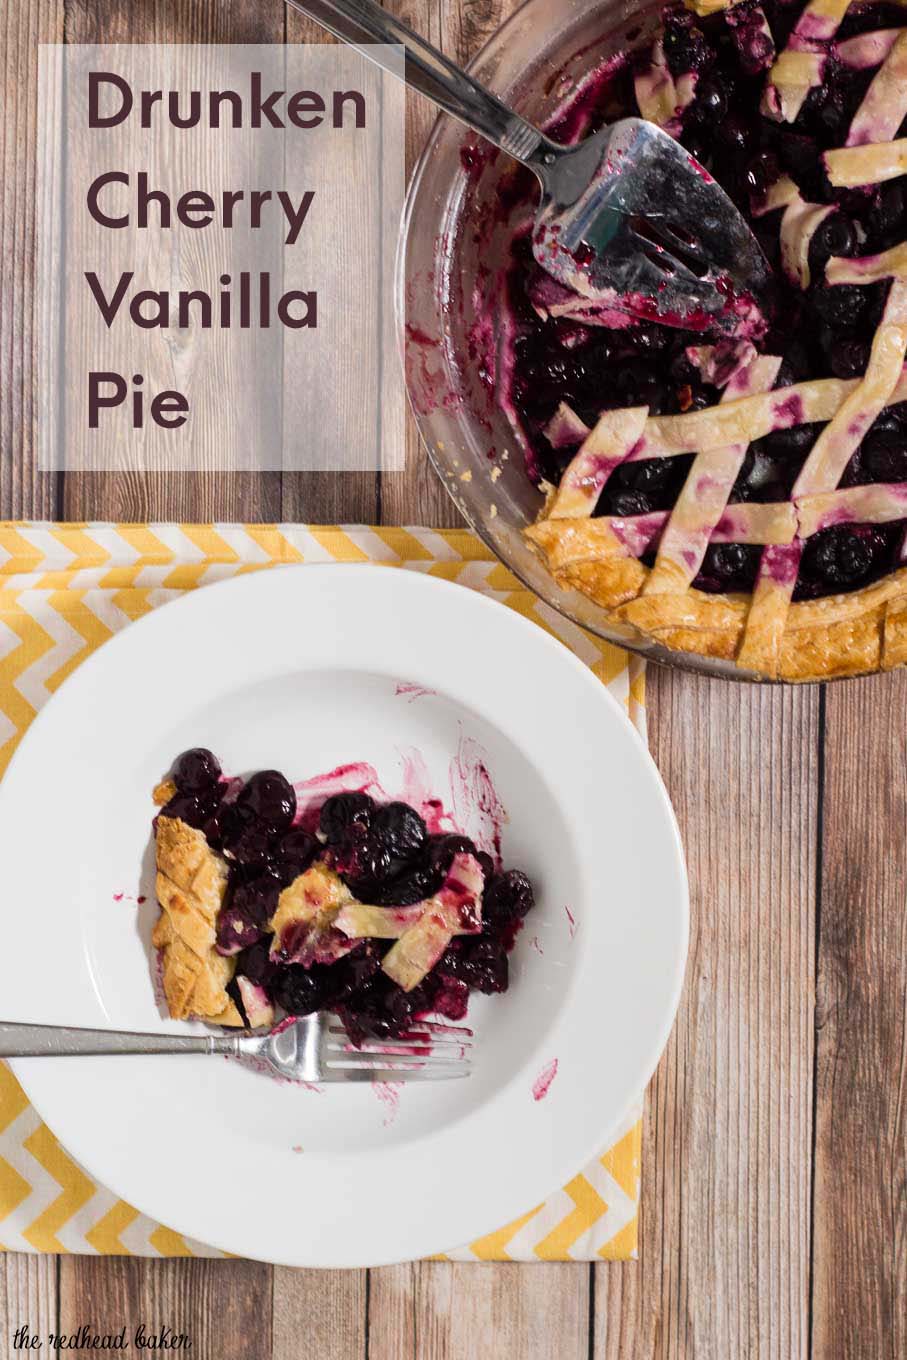 We're celebrating Pi{e} Day! Drunken cherry vanilla pie combines cherries, vanilla bean, and brandy in a flaky pie crust. 